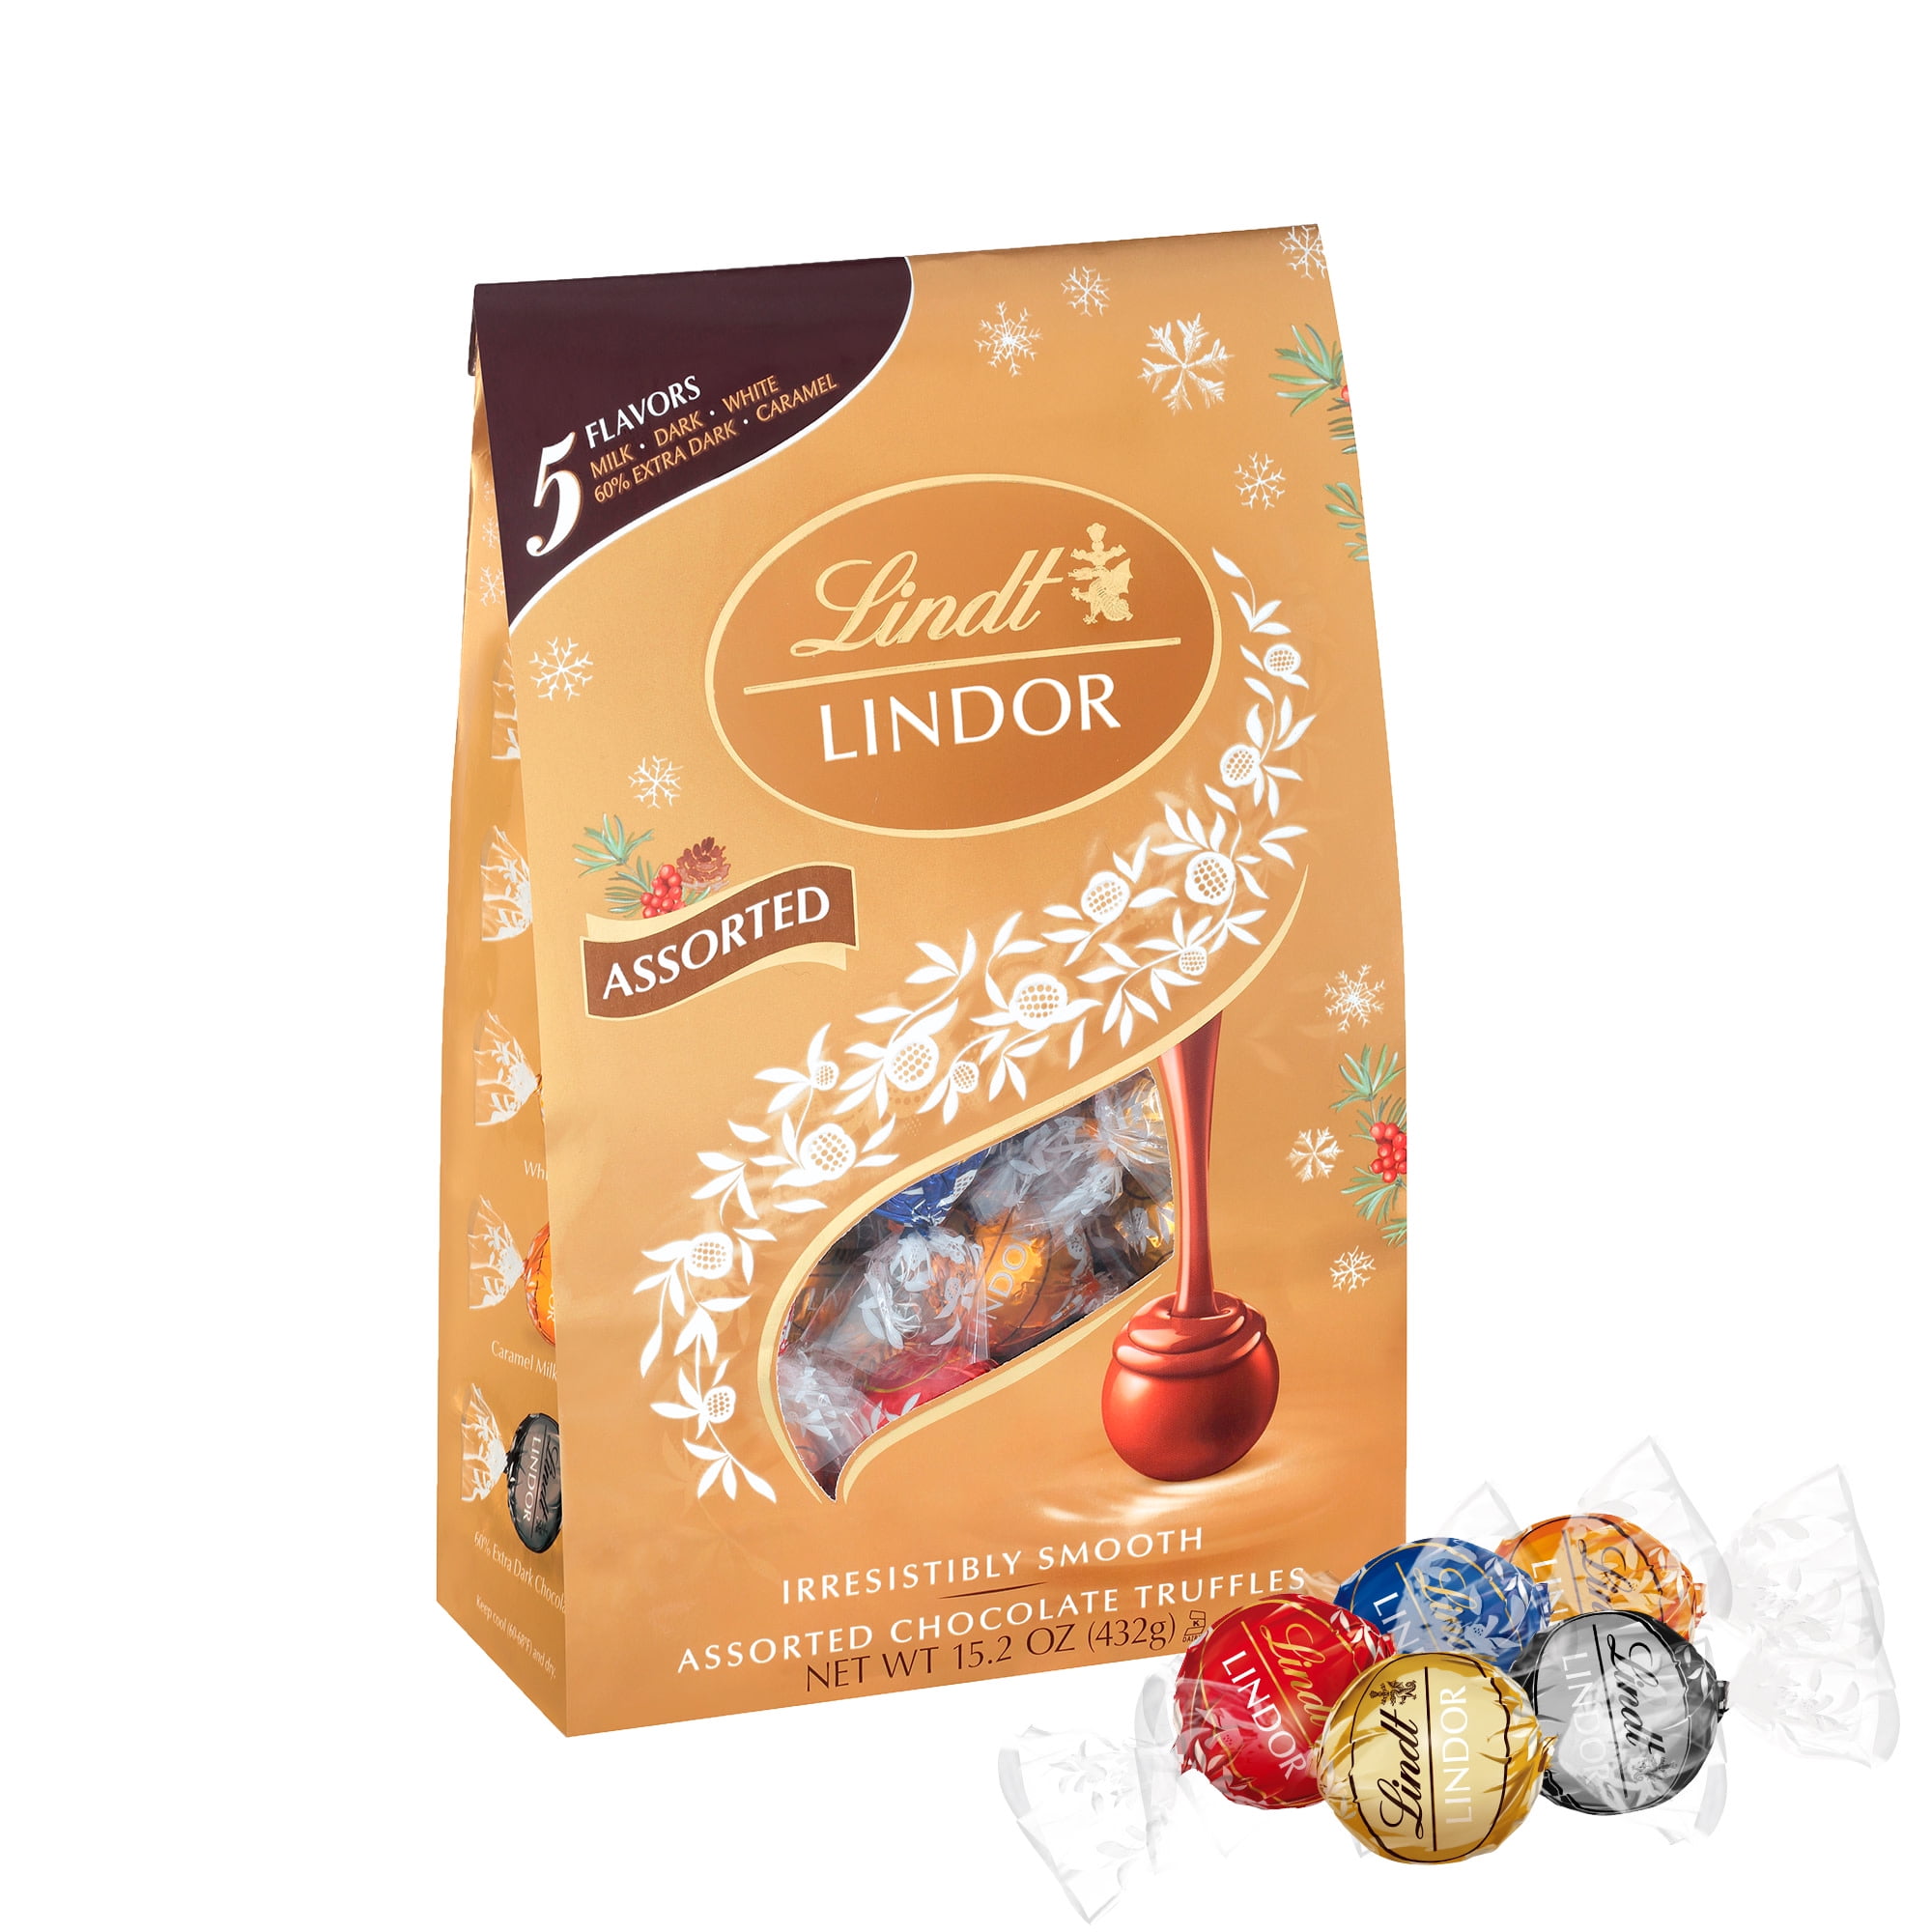 Lindt LINDOR Holiday Assorted Chocolate Candy Truffles, 15.2 oz. Bag